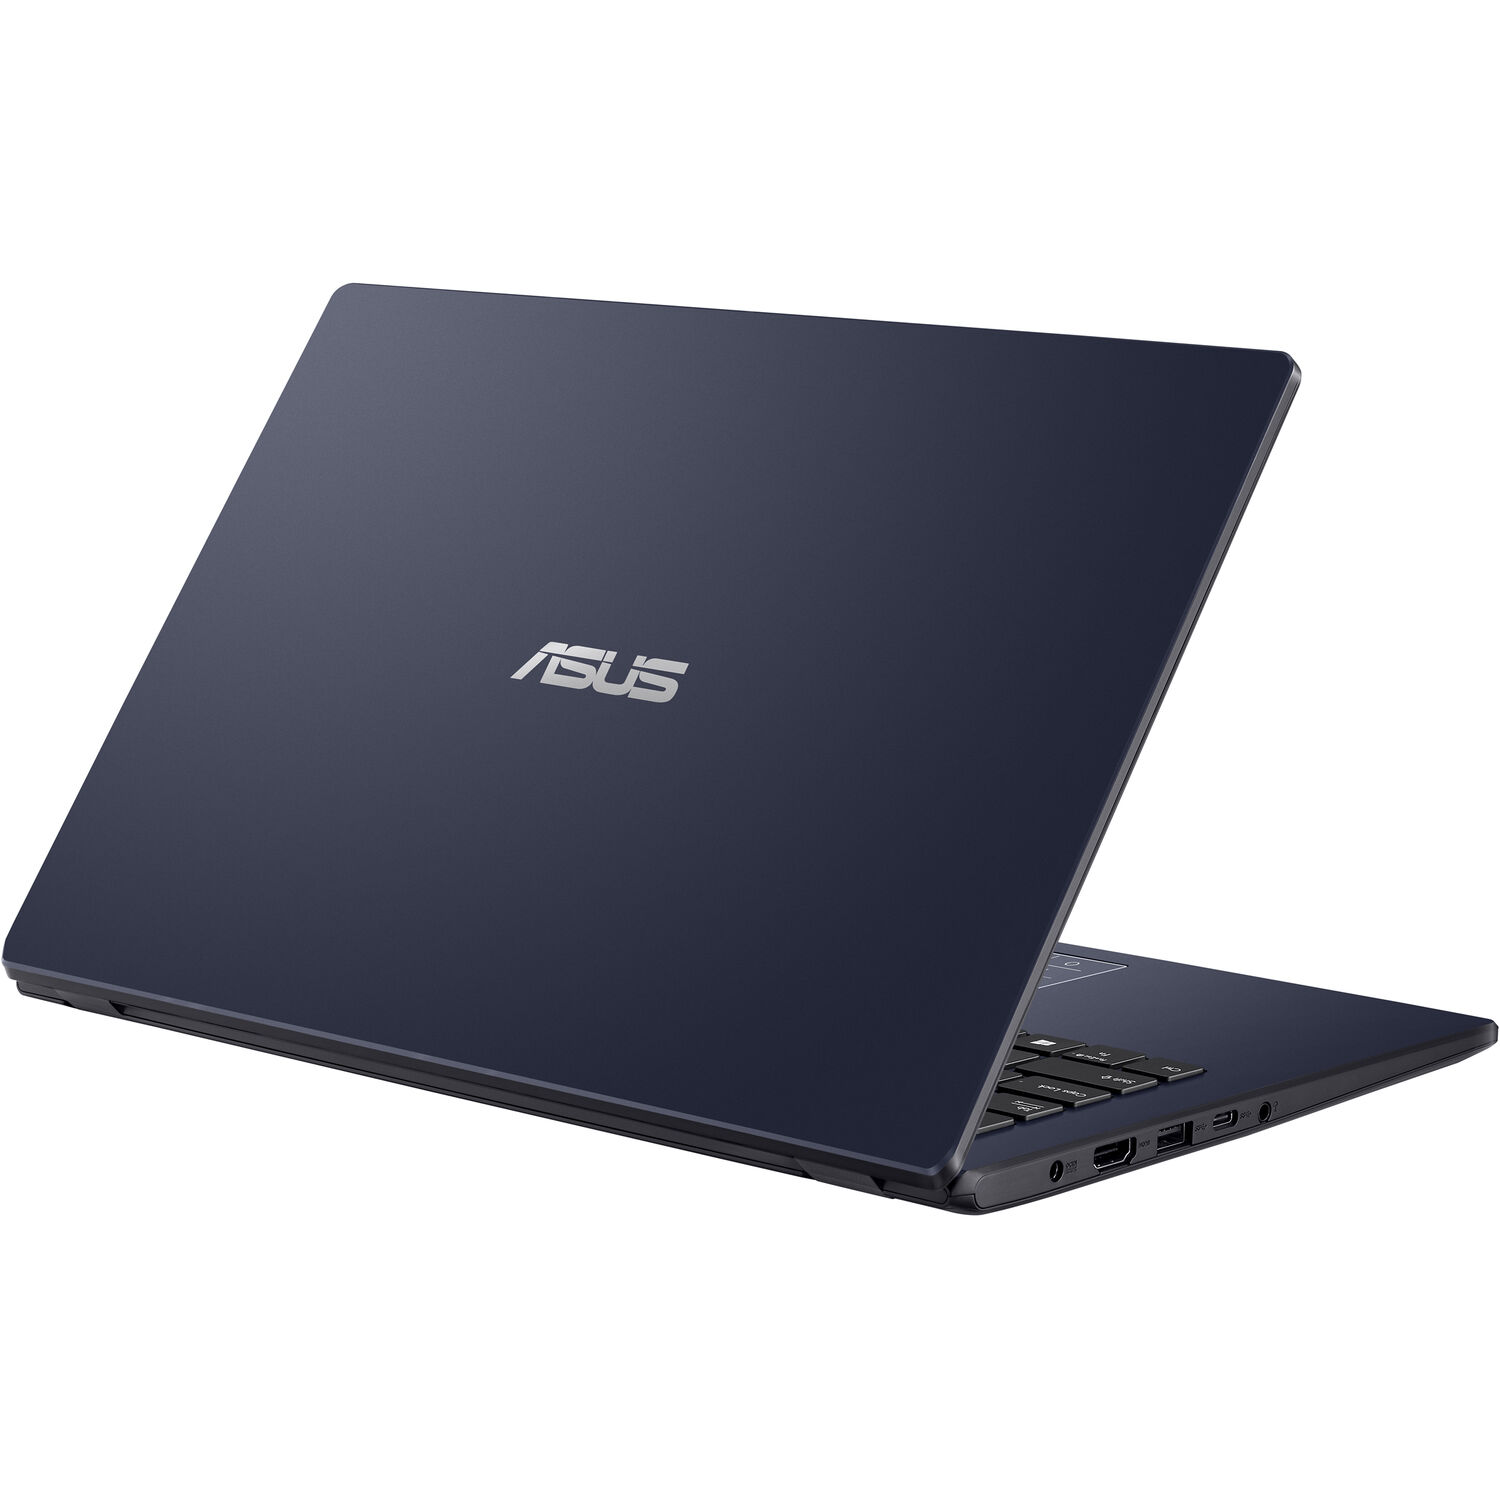 ASUS 14 L410 Everyday Value Laptop (Intel Celeron N4020 2-Core, 4GB RAM, 64GB SSD + 64GB eMMC, 14.0" Full HD (1920x1080), Intel UHD 600, Wifi, Bluetooth, Webcam, 1xUSB 3.2, 1xHDMI, Win 10 Home) - image 5 of 6